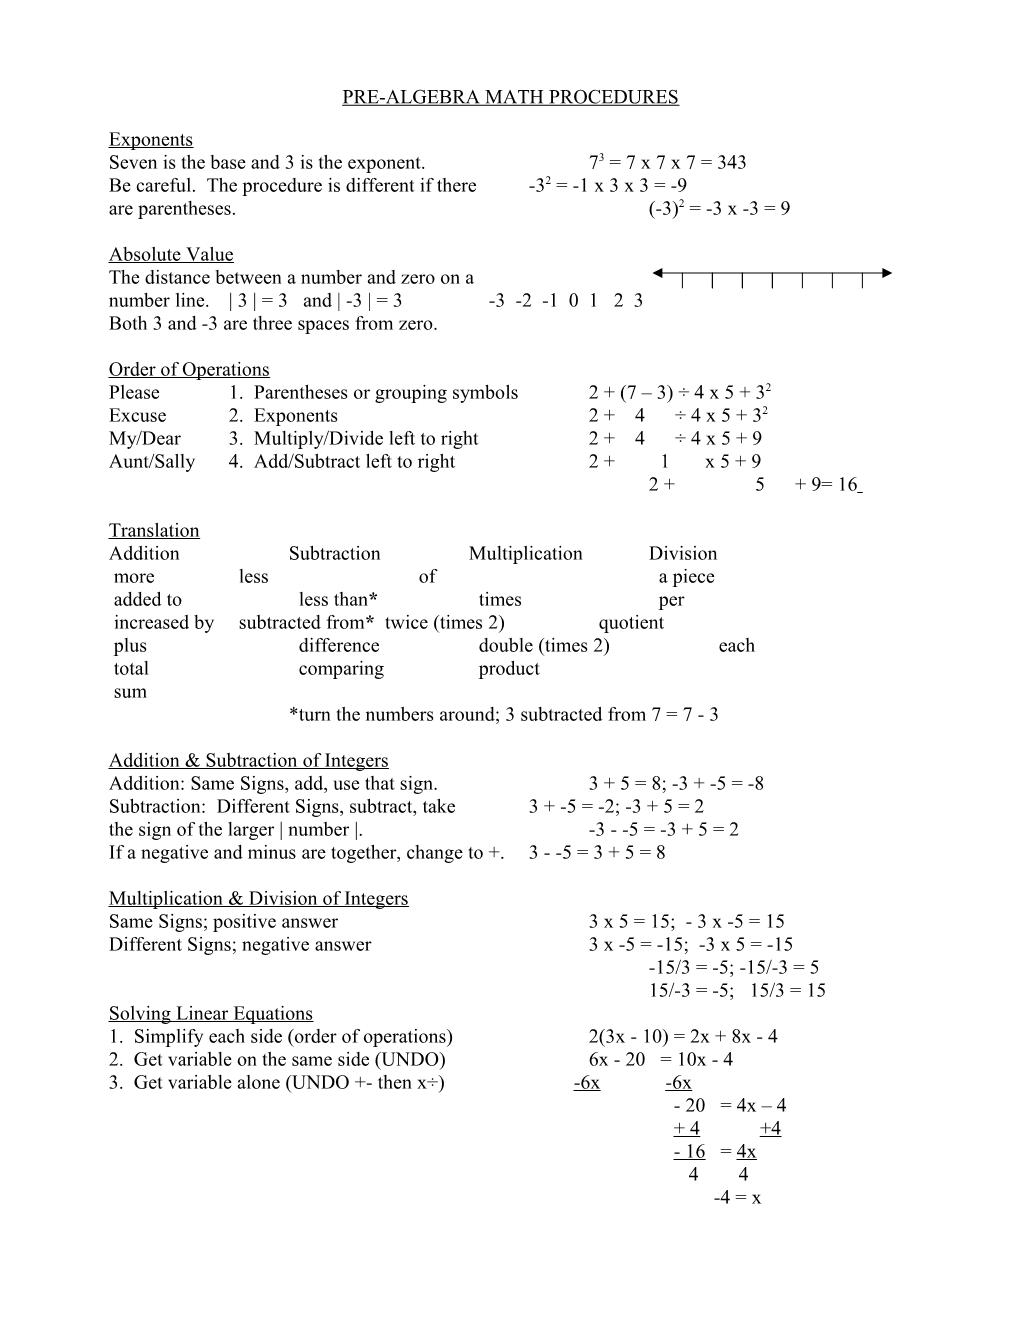 Pre-Algebra Math Procedures